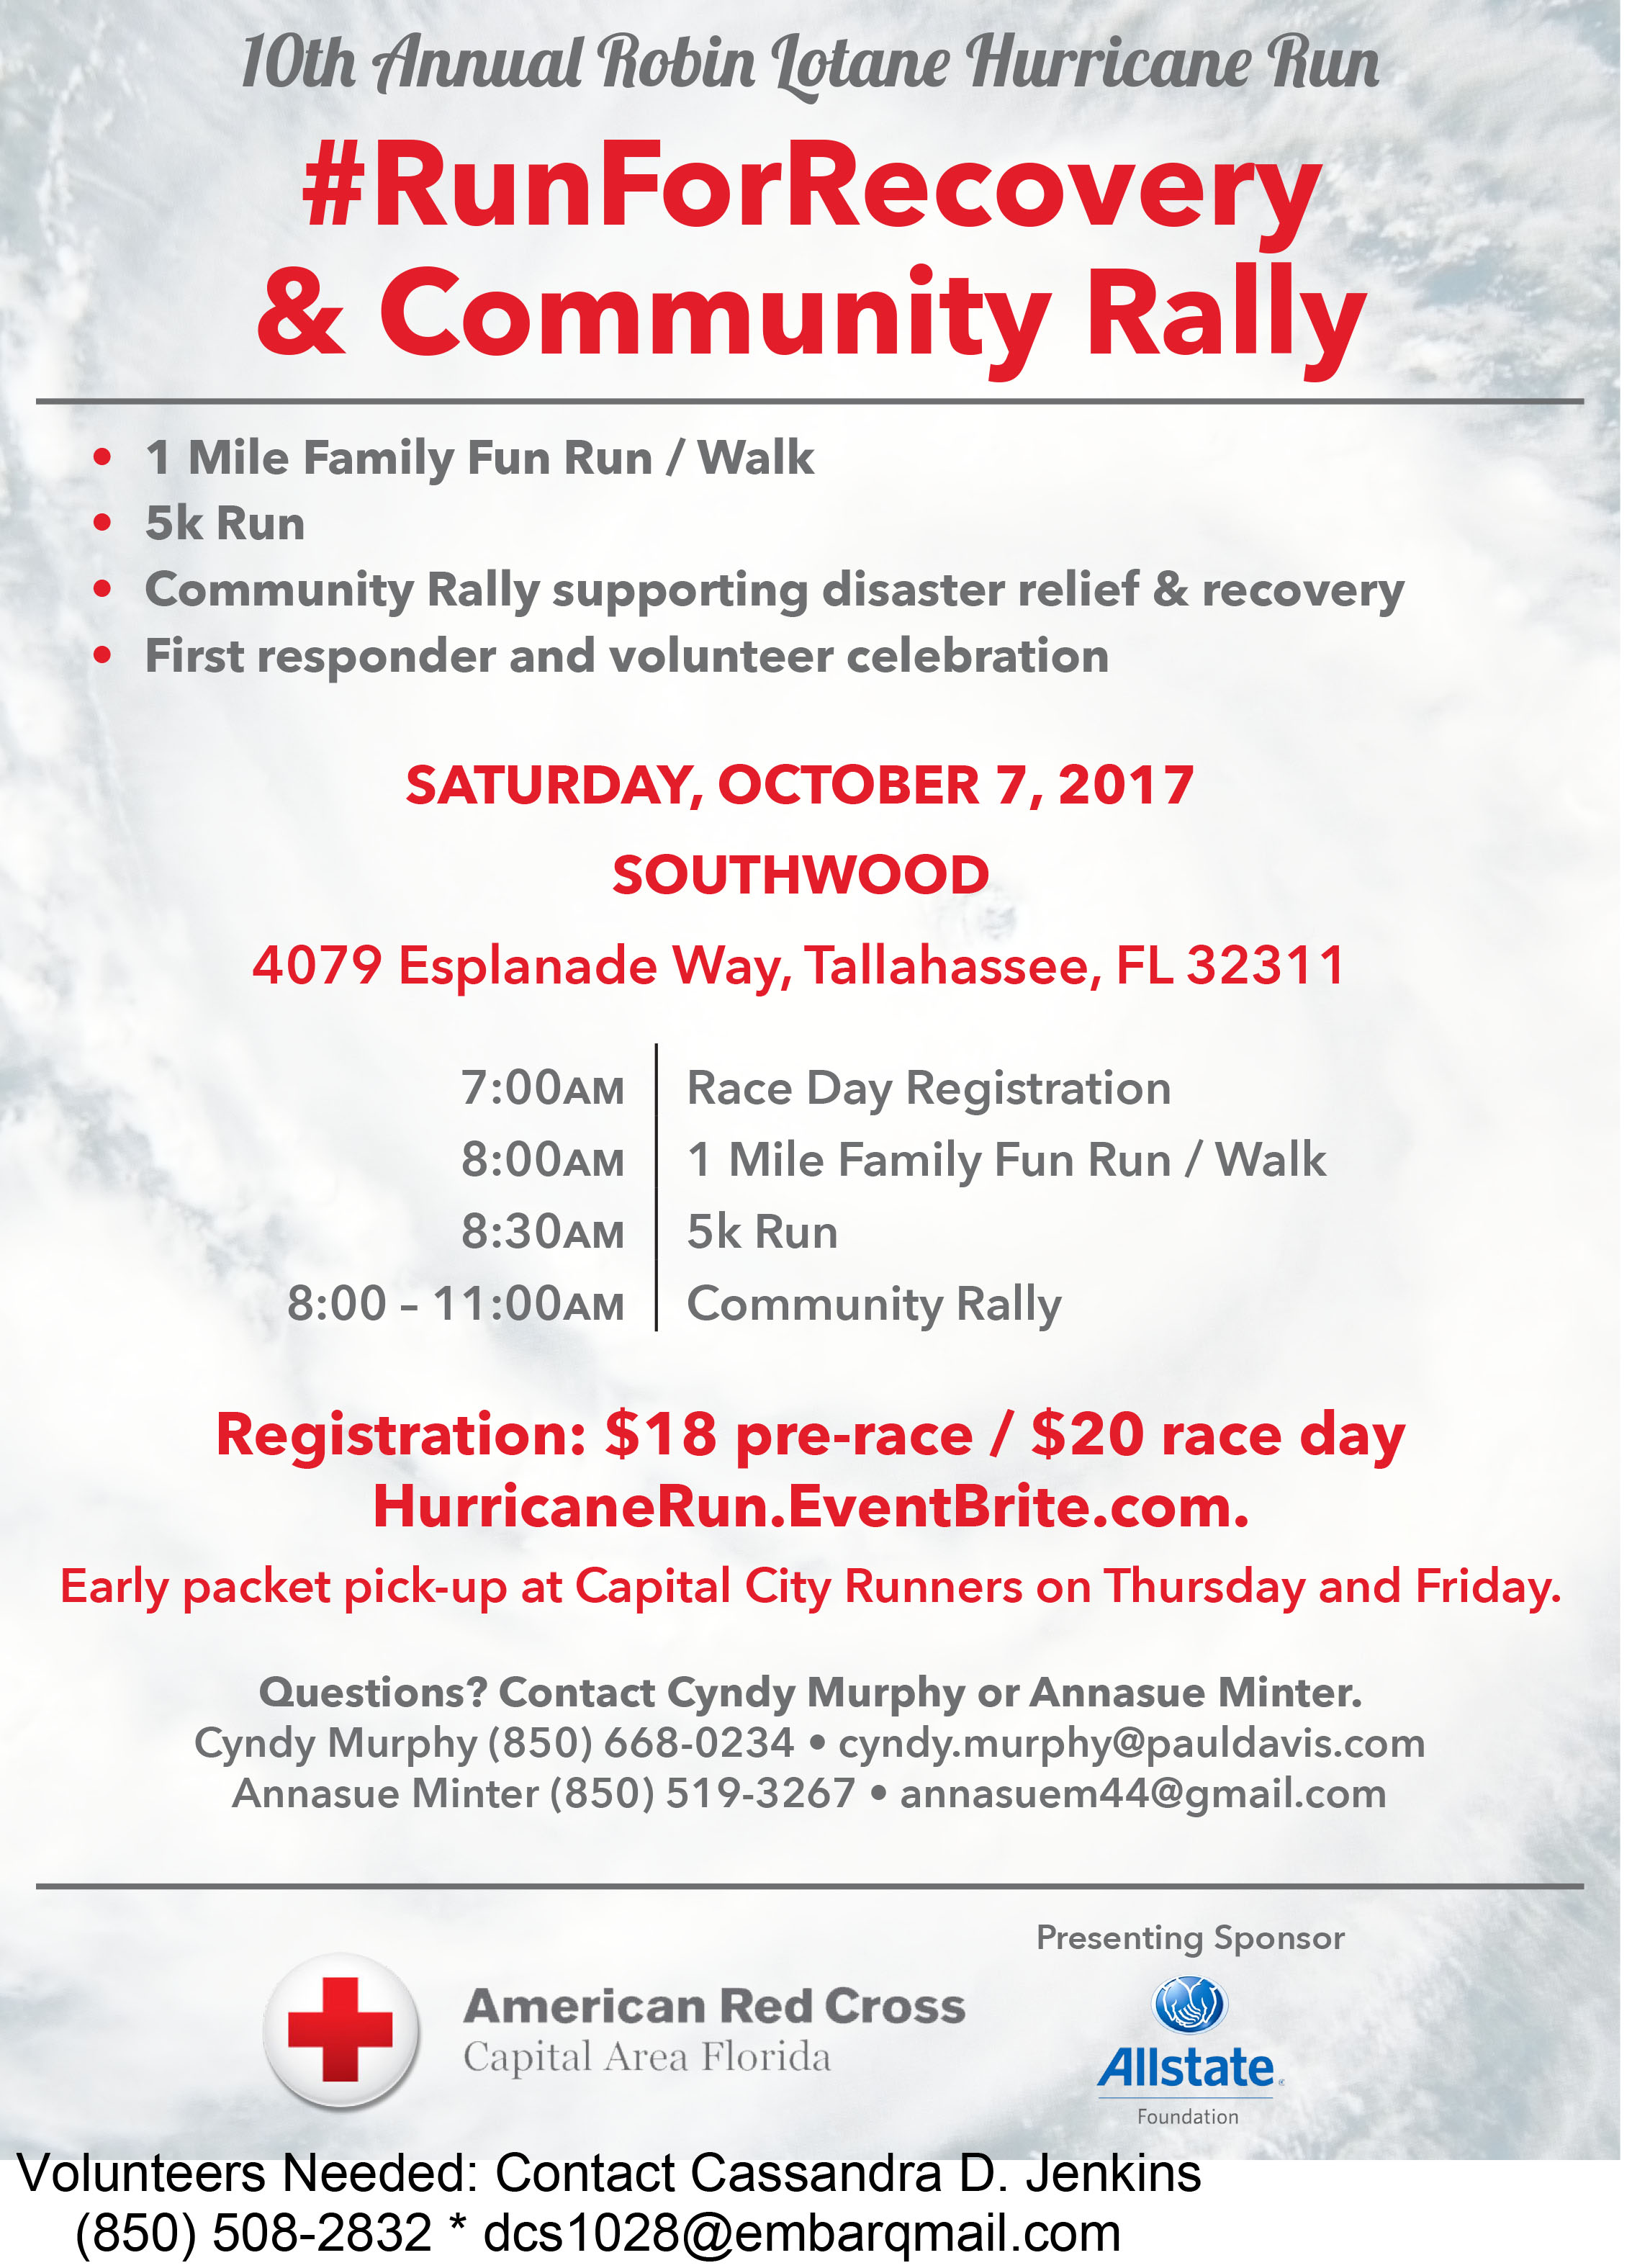 10th Annual Robin Lotane Hurricane Run: Saturday, October 7, 2017 in Southwood